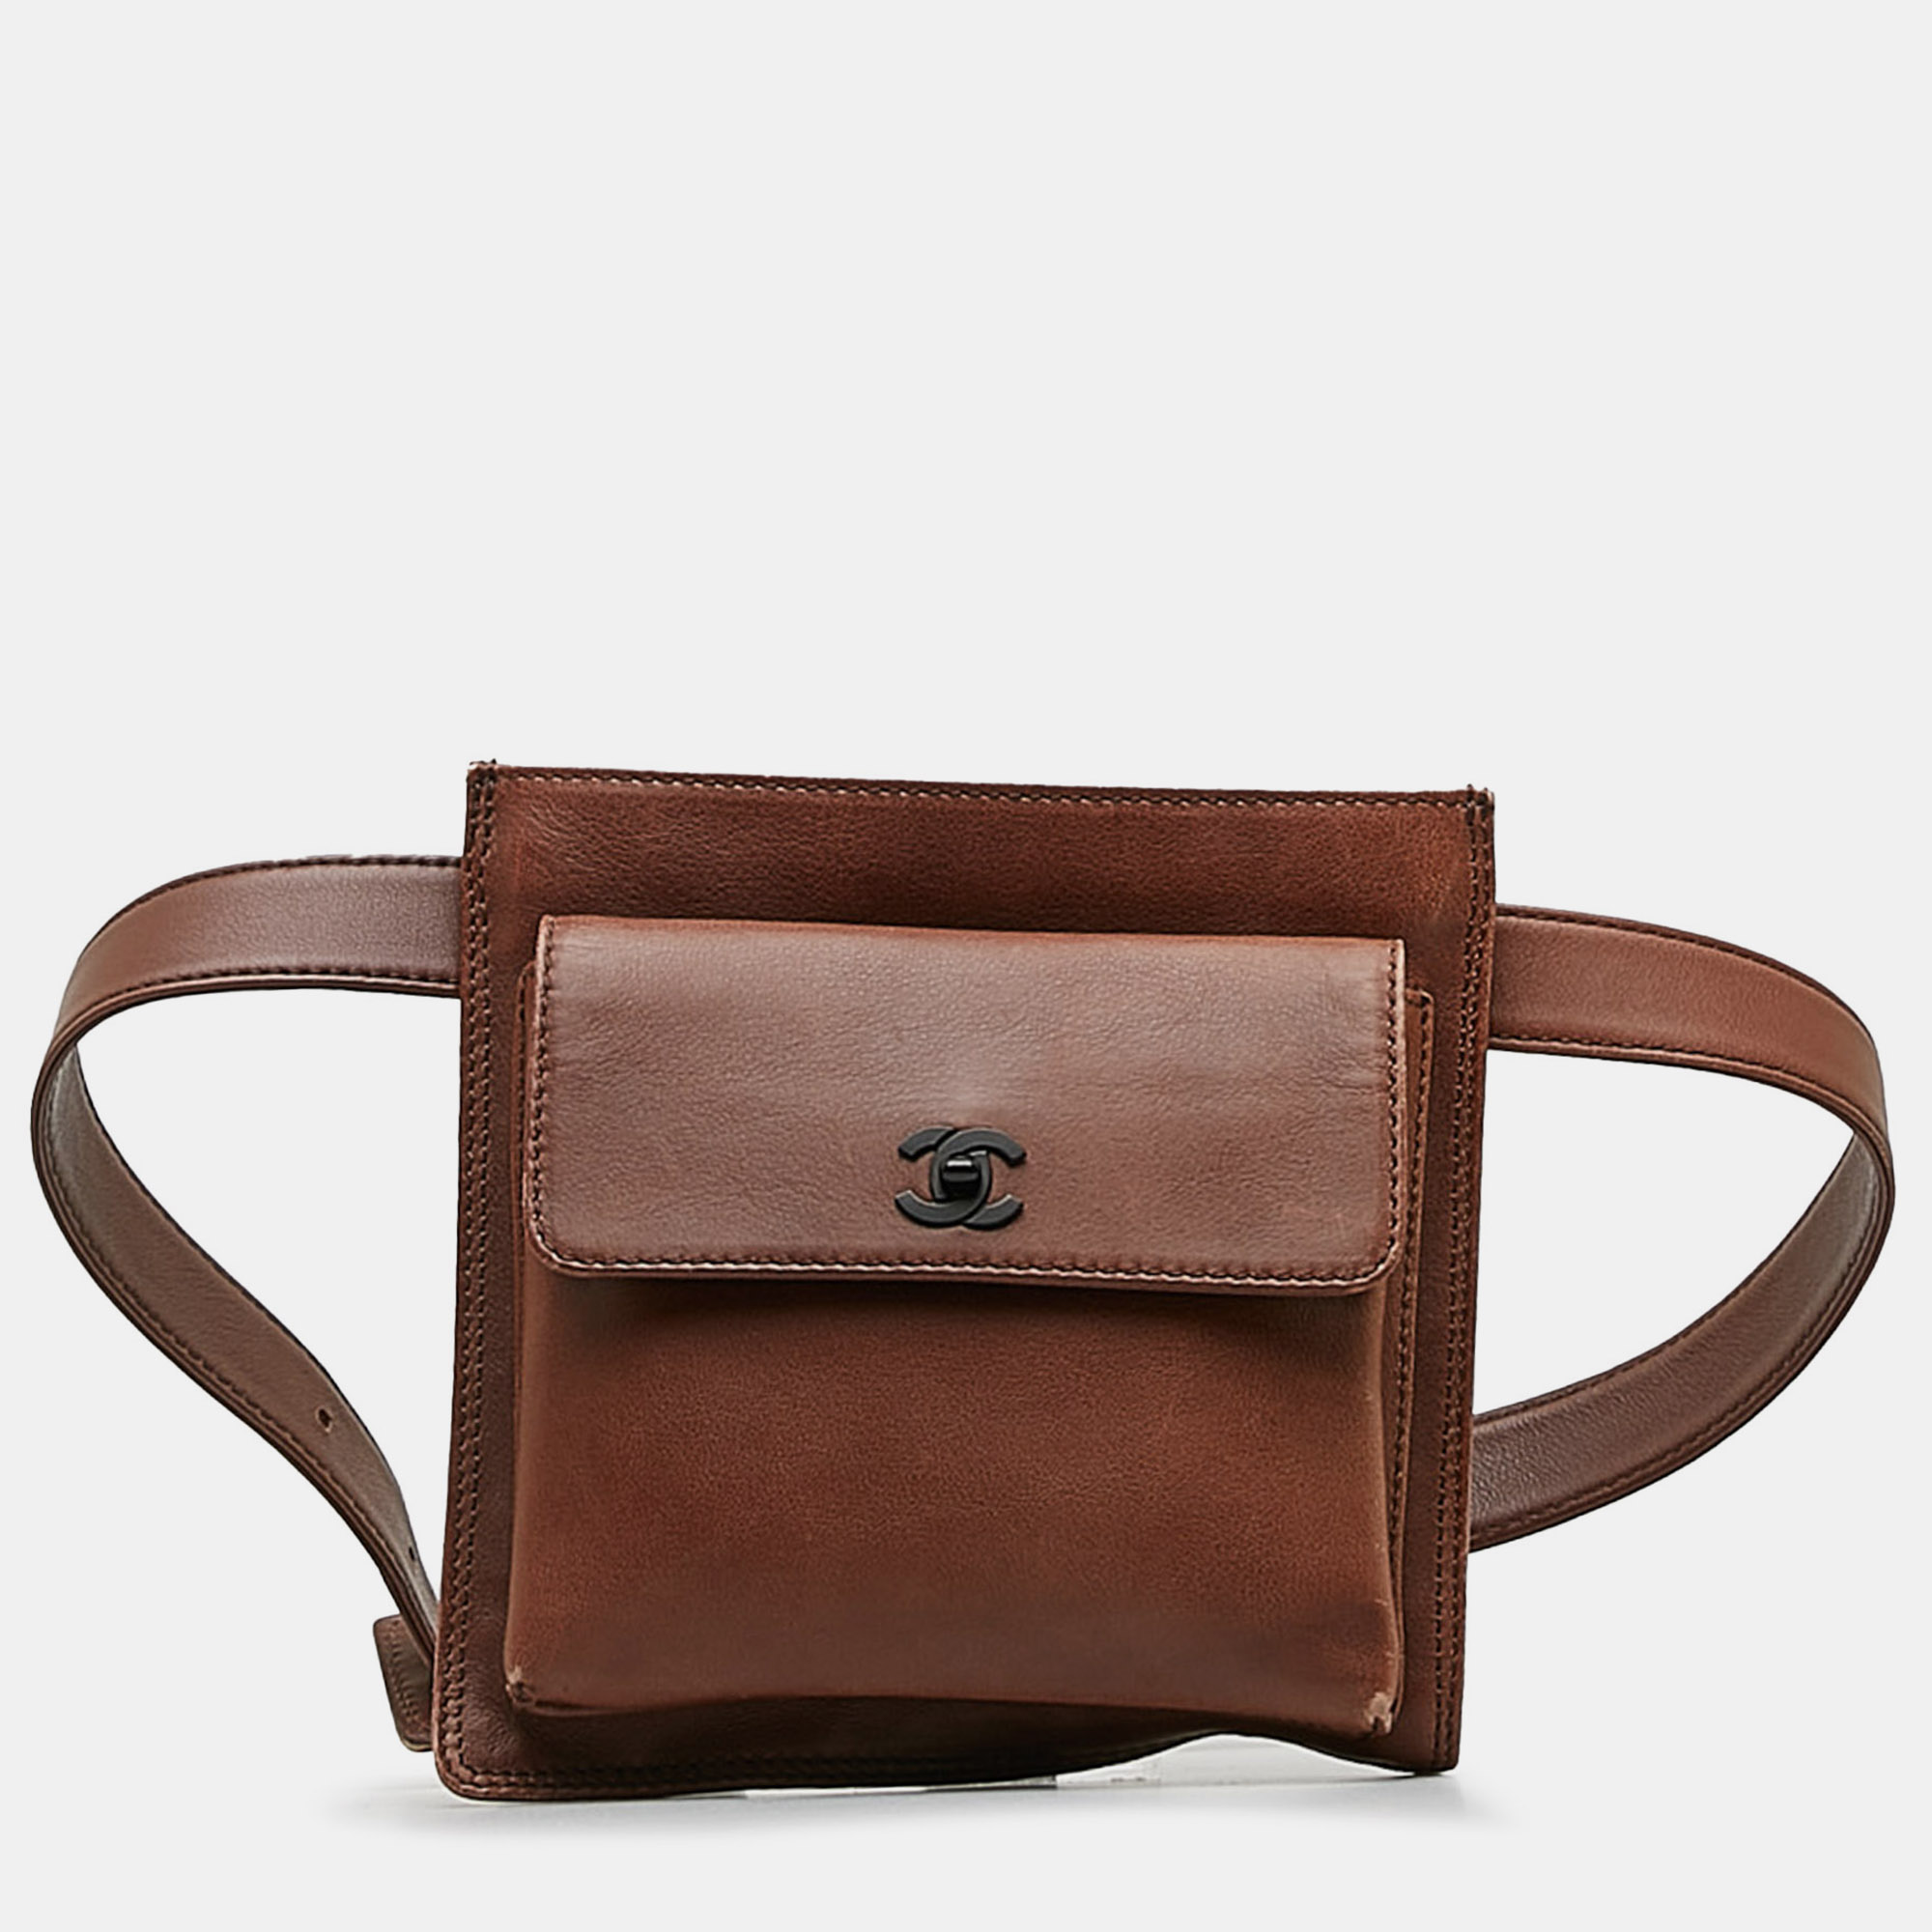 Chanel brown leather cc belt bag